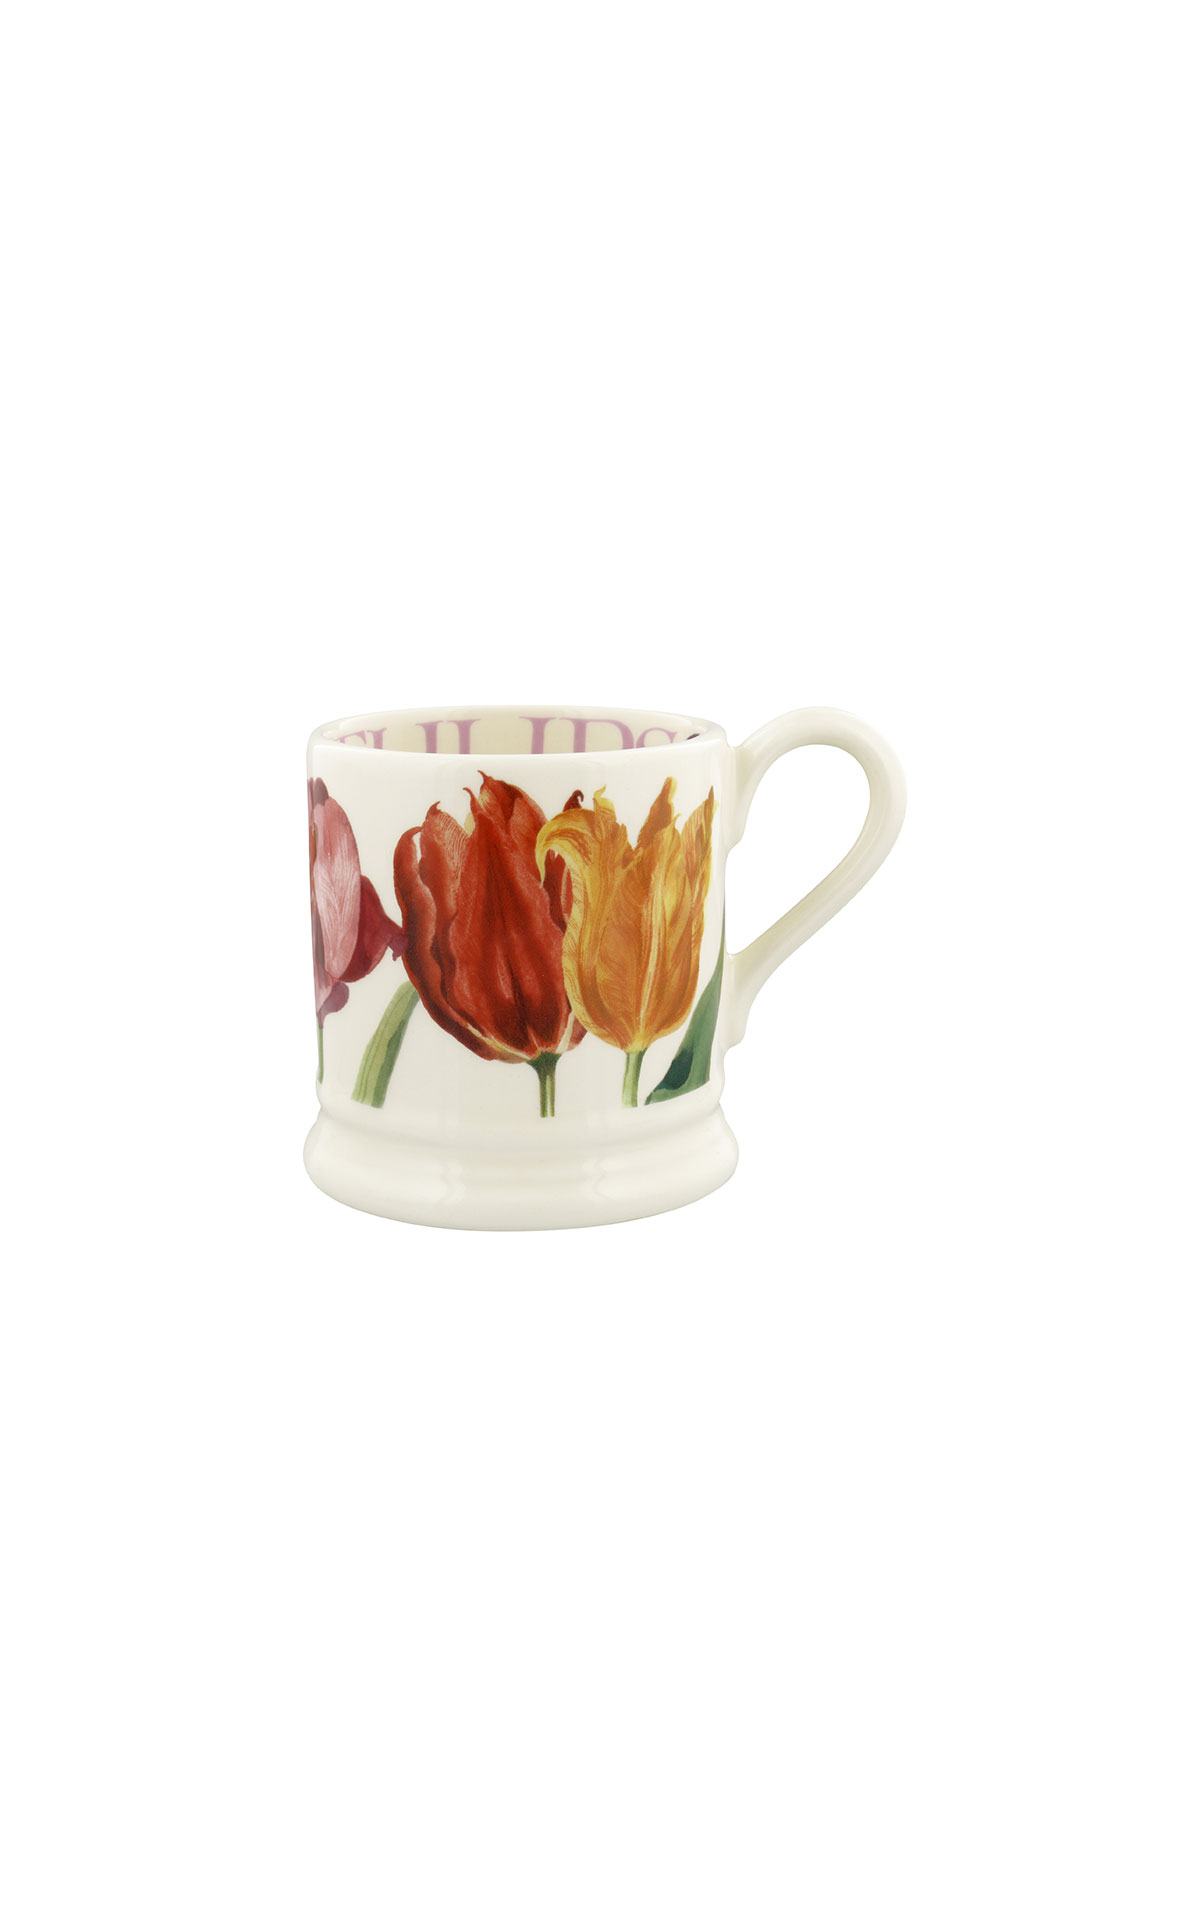 Emma Bridgewater Tulips half pint mug from Bicester Village